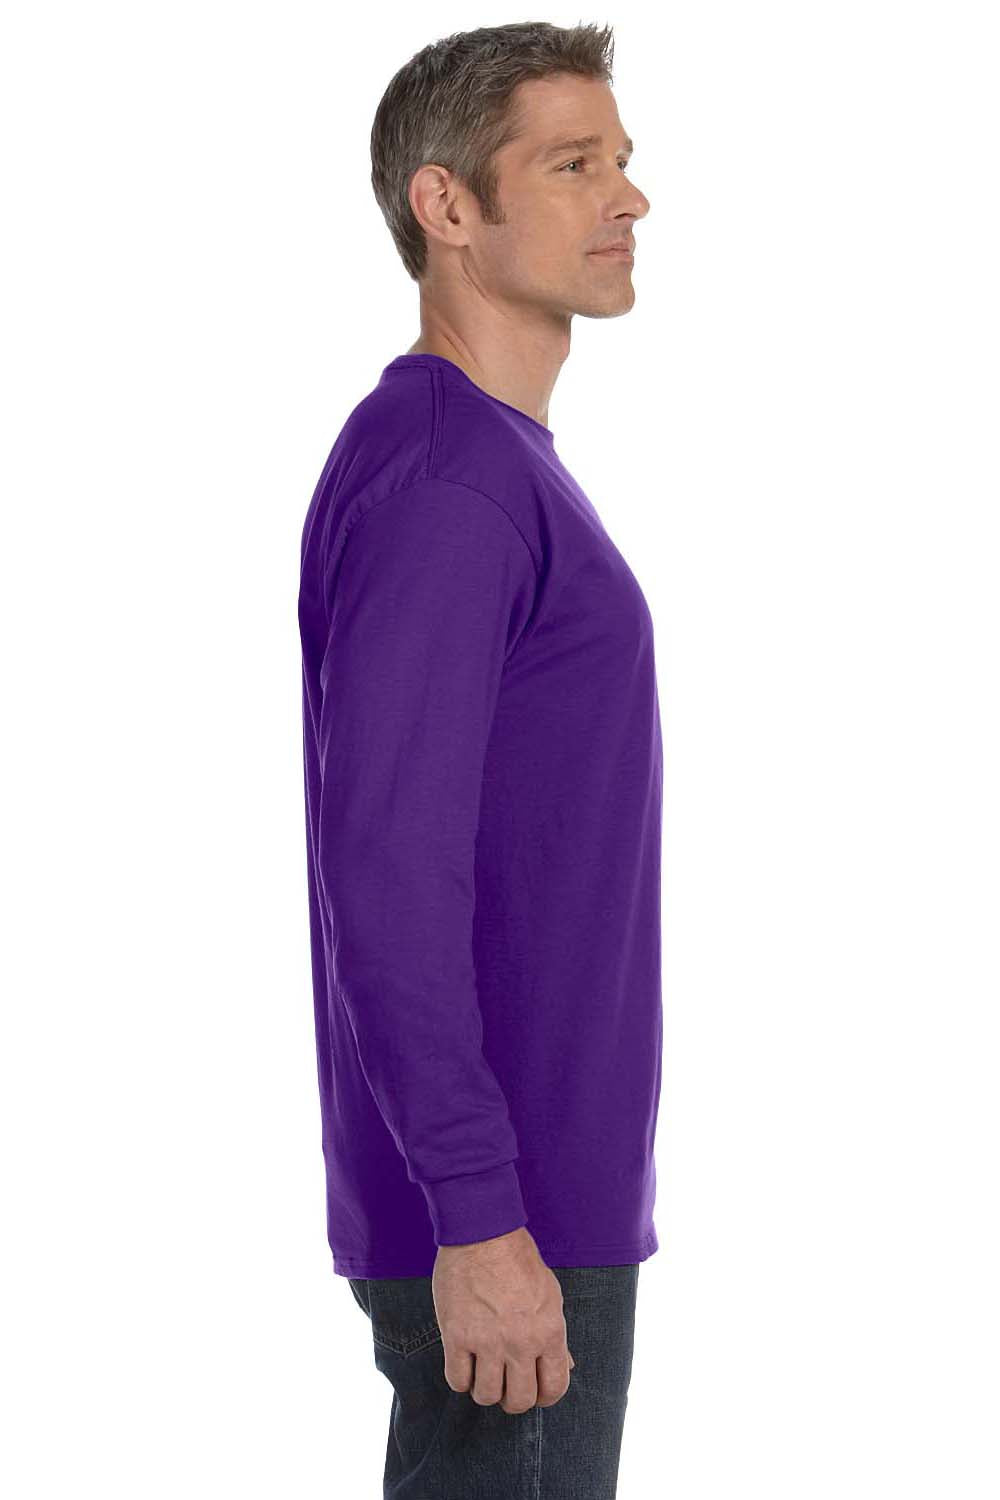 Jerzees 29L Mens Dri-Power Moisture Wicking Long Sleeve Crewneck T-Shirt Purple Side